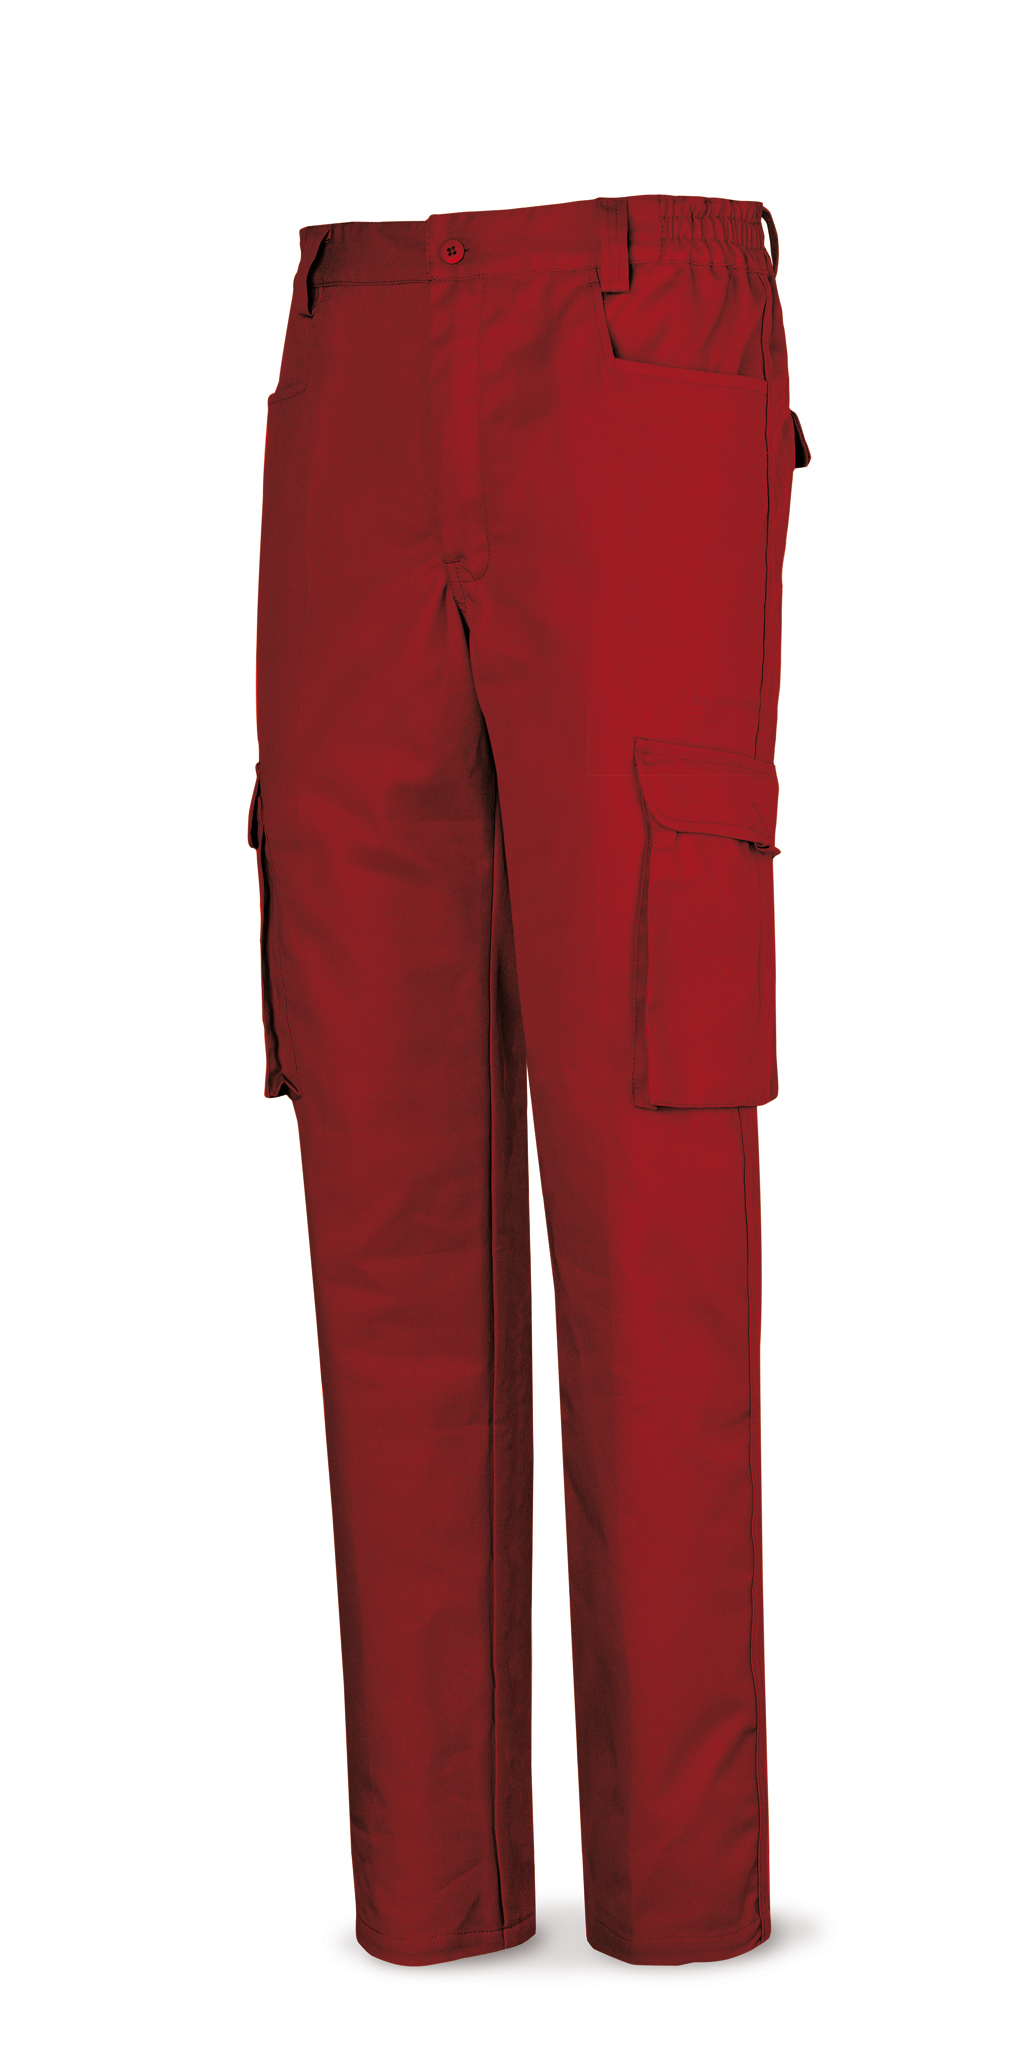 488-PR Top Workwear Top Series Tergal. Red.